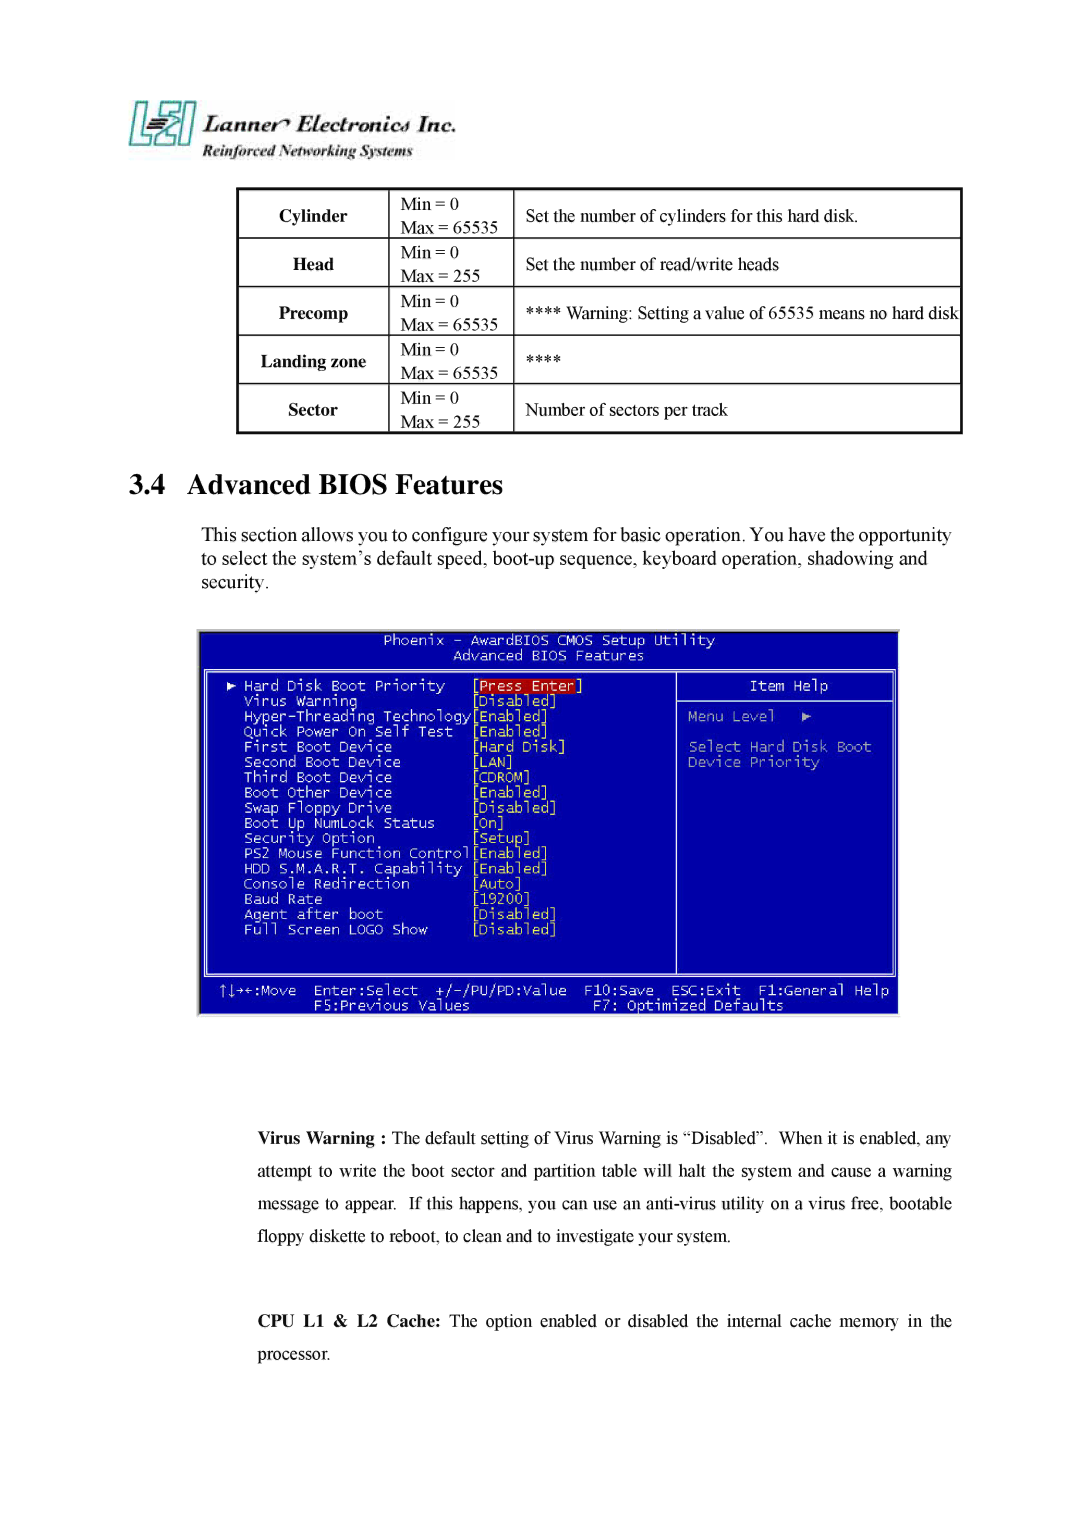 Lanner electronic FW-7870, 19" 1U Intel Pentium 4 Socket T Rackmount Network Security Platform Advanced Bios Features 